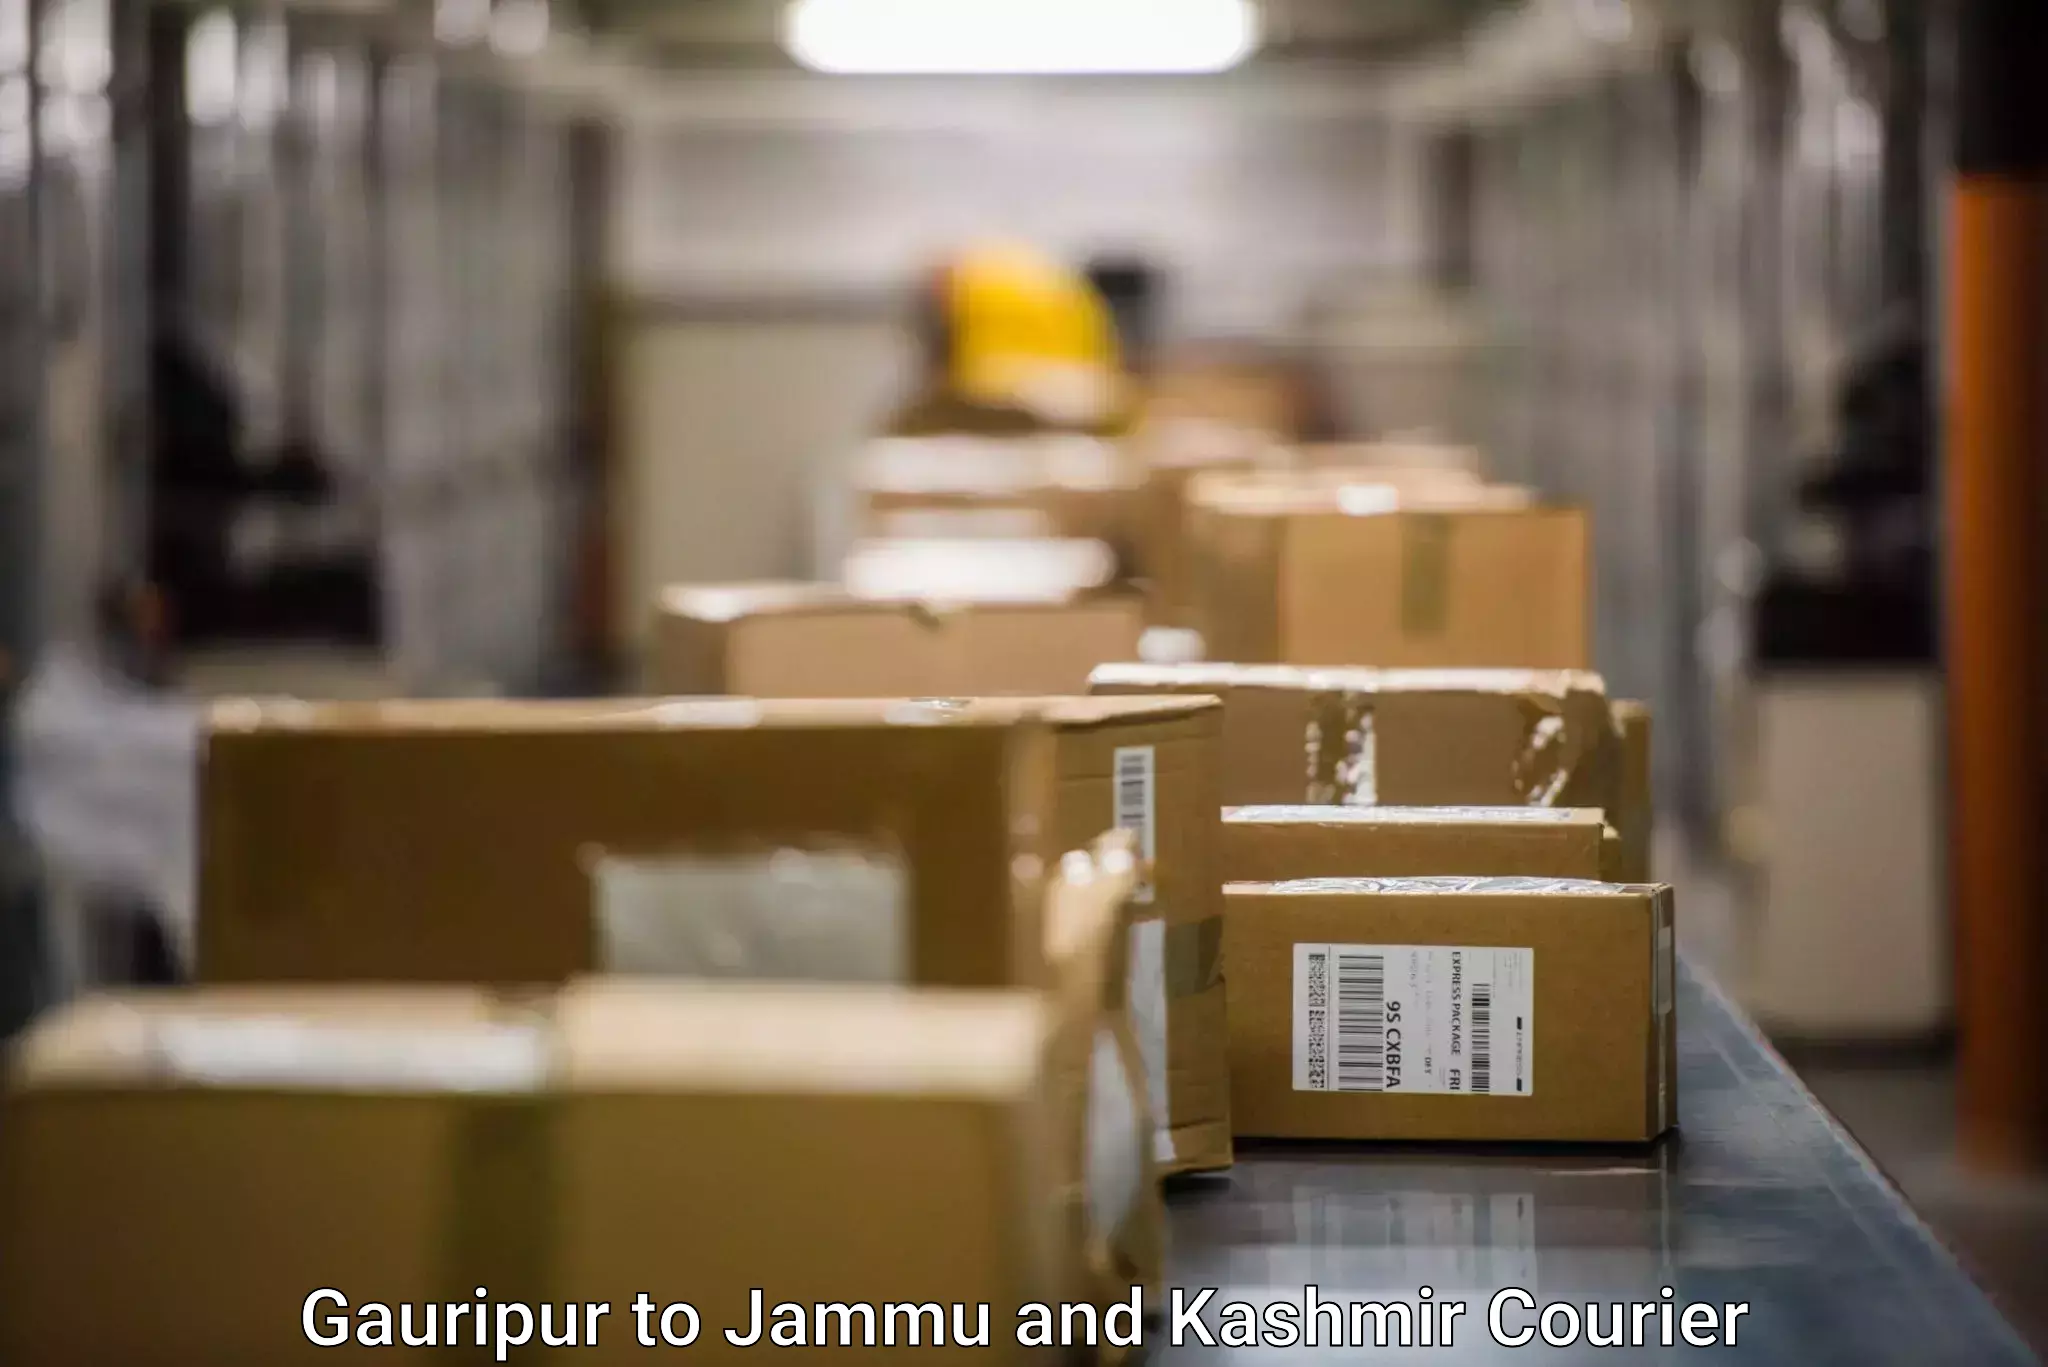 Global shipping solutions Gauripur to Srinagar Kashmir